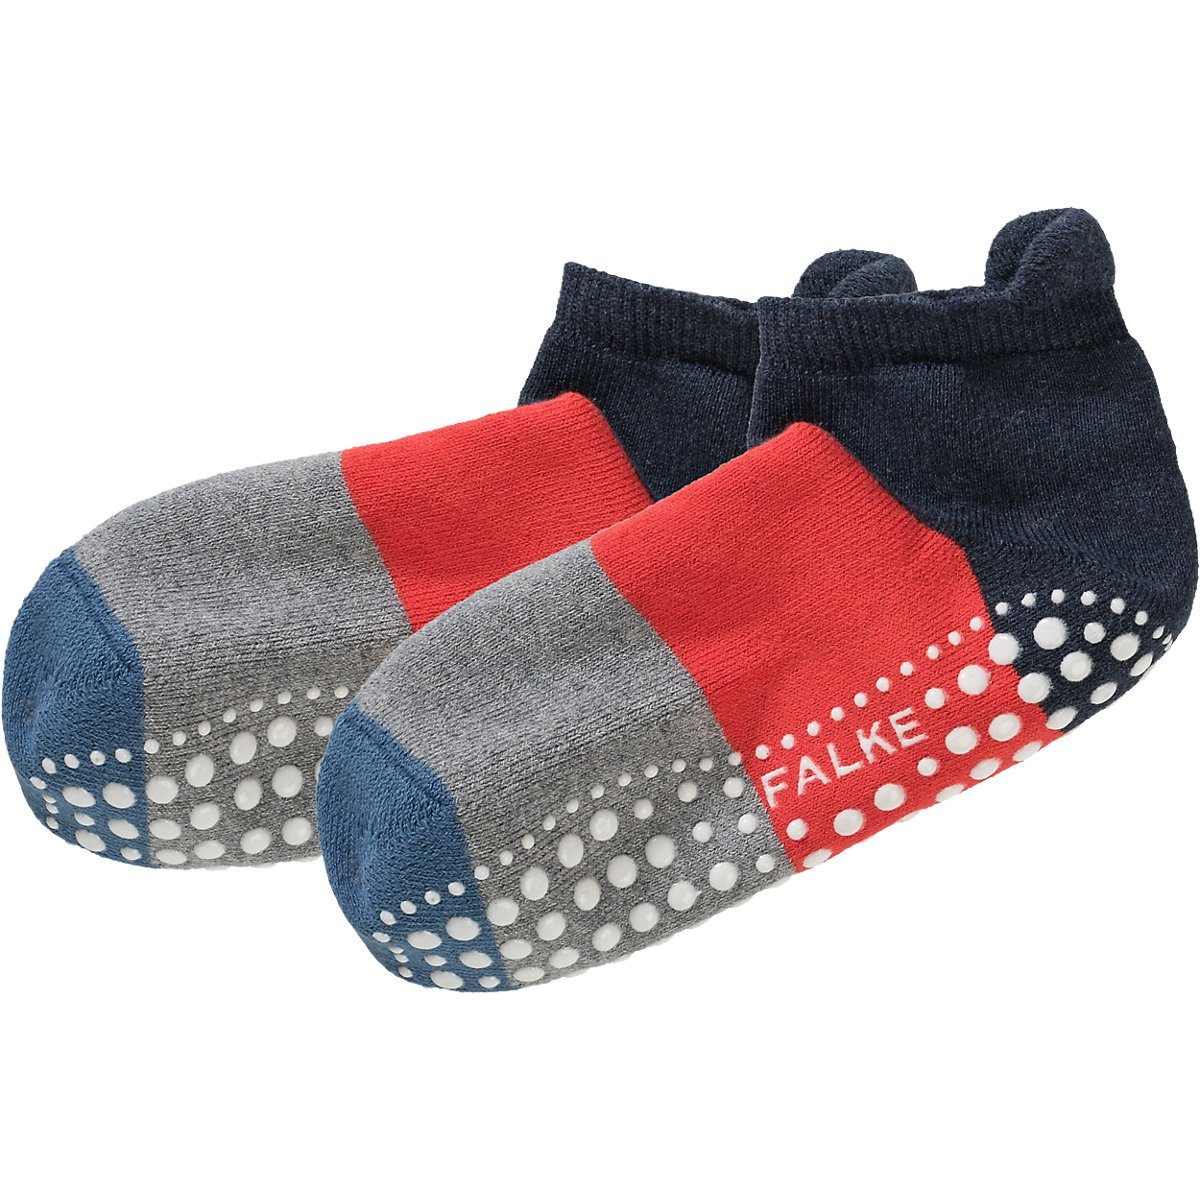 FALKE Haussocken »Catspads Kinder Socken« kaufen | OTTO